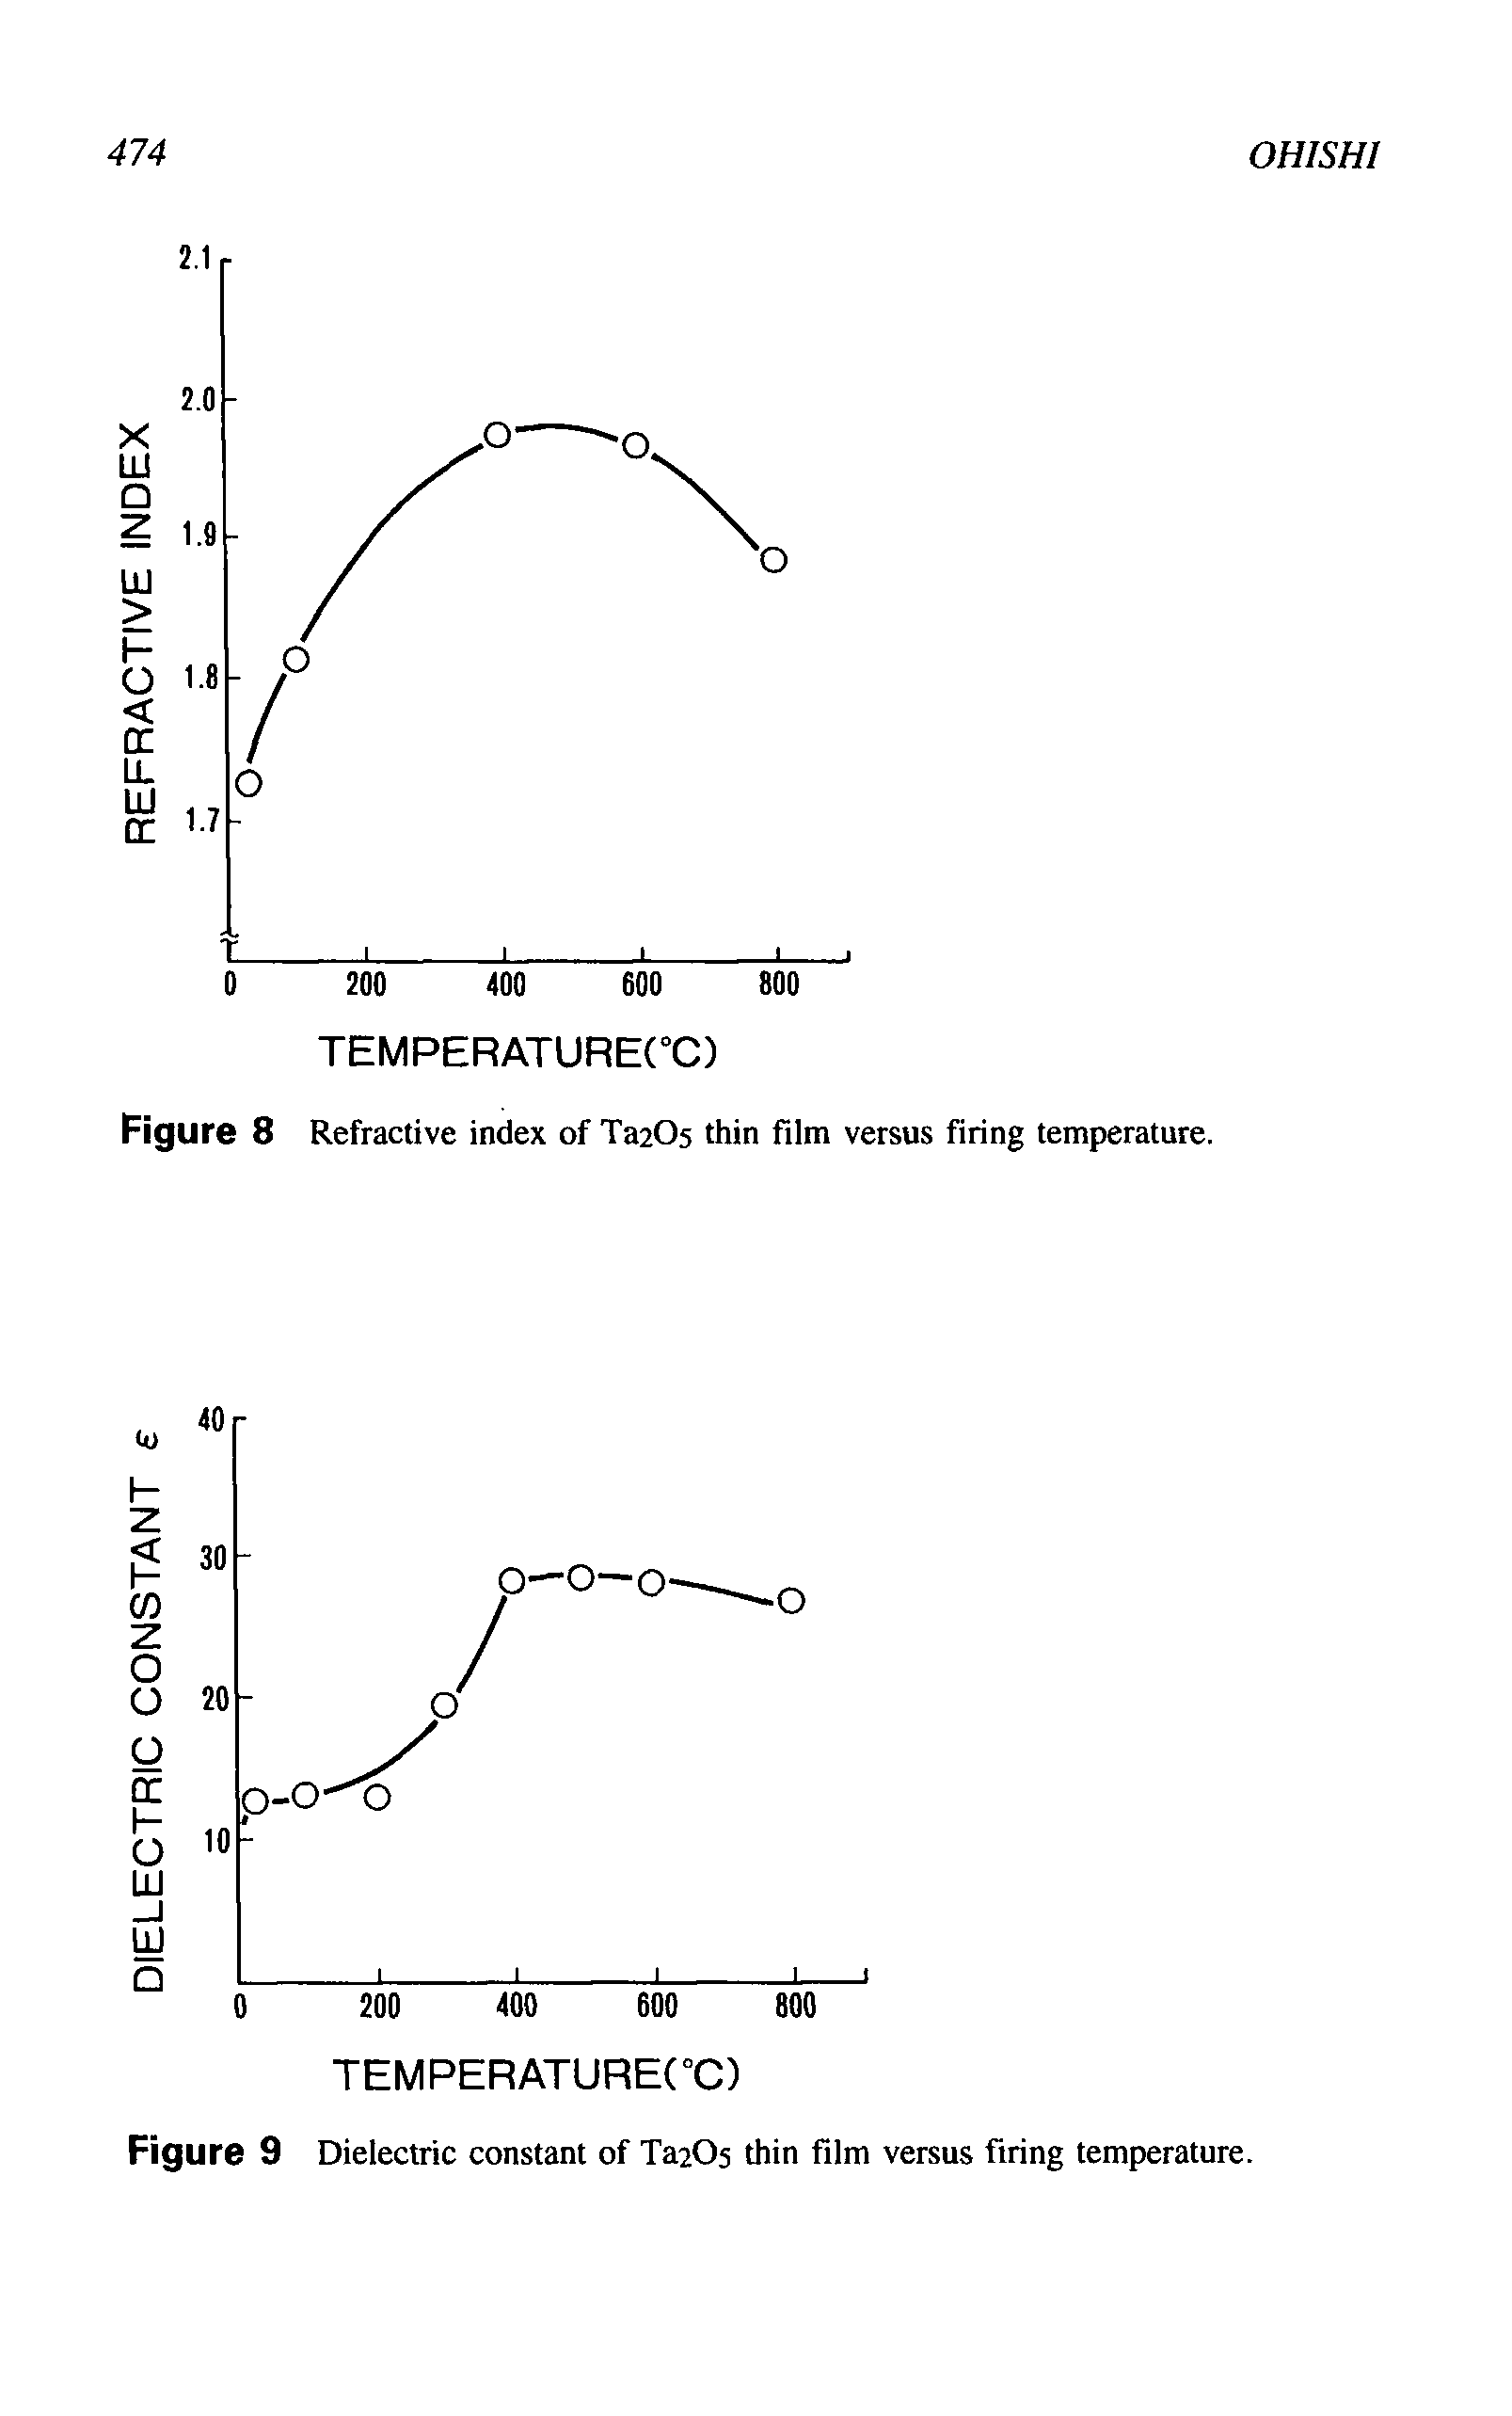 Figure 9 Dielectric constant of TazOs thin film versus firing temperature.